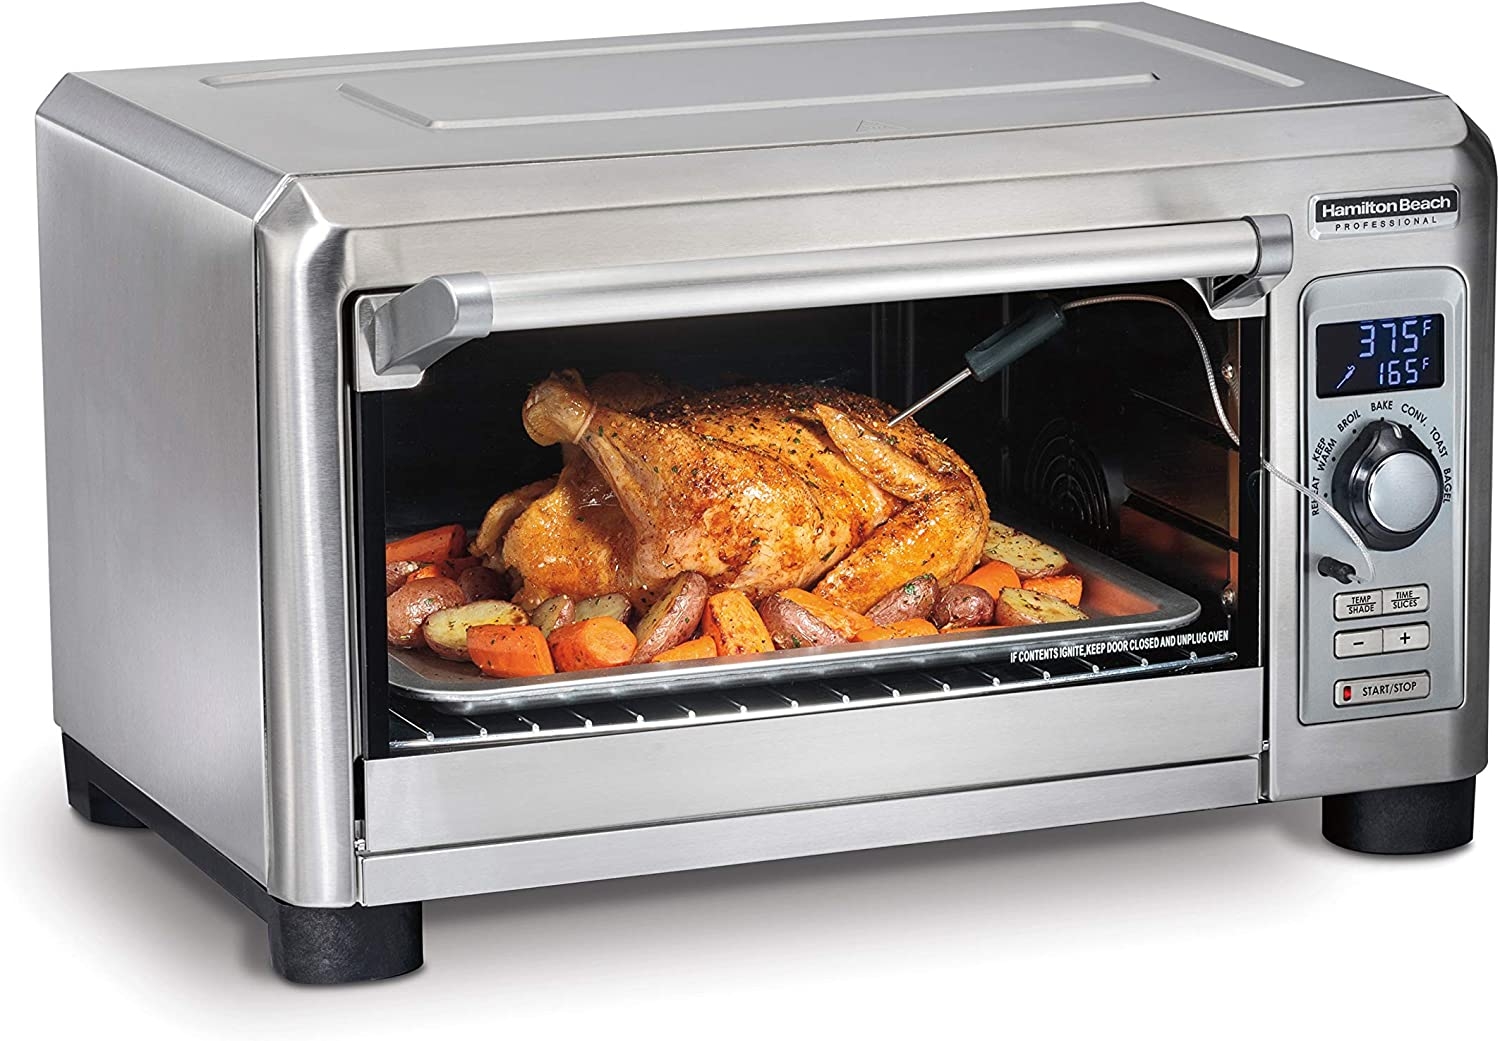 Hamilton Beach Professional Sure-Crisp Digital Air Fryer Countertop Toaster Oven, 1500W, Fits 12” Pizza 6 Slice Capacity,